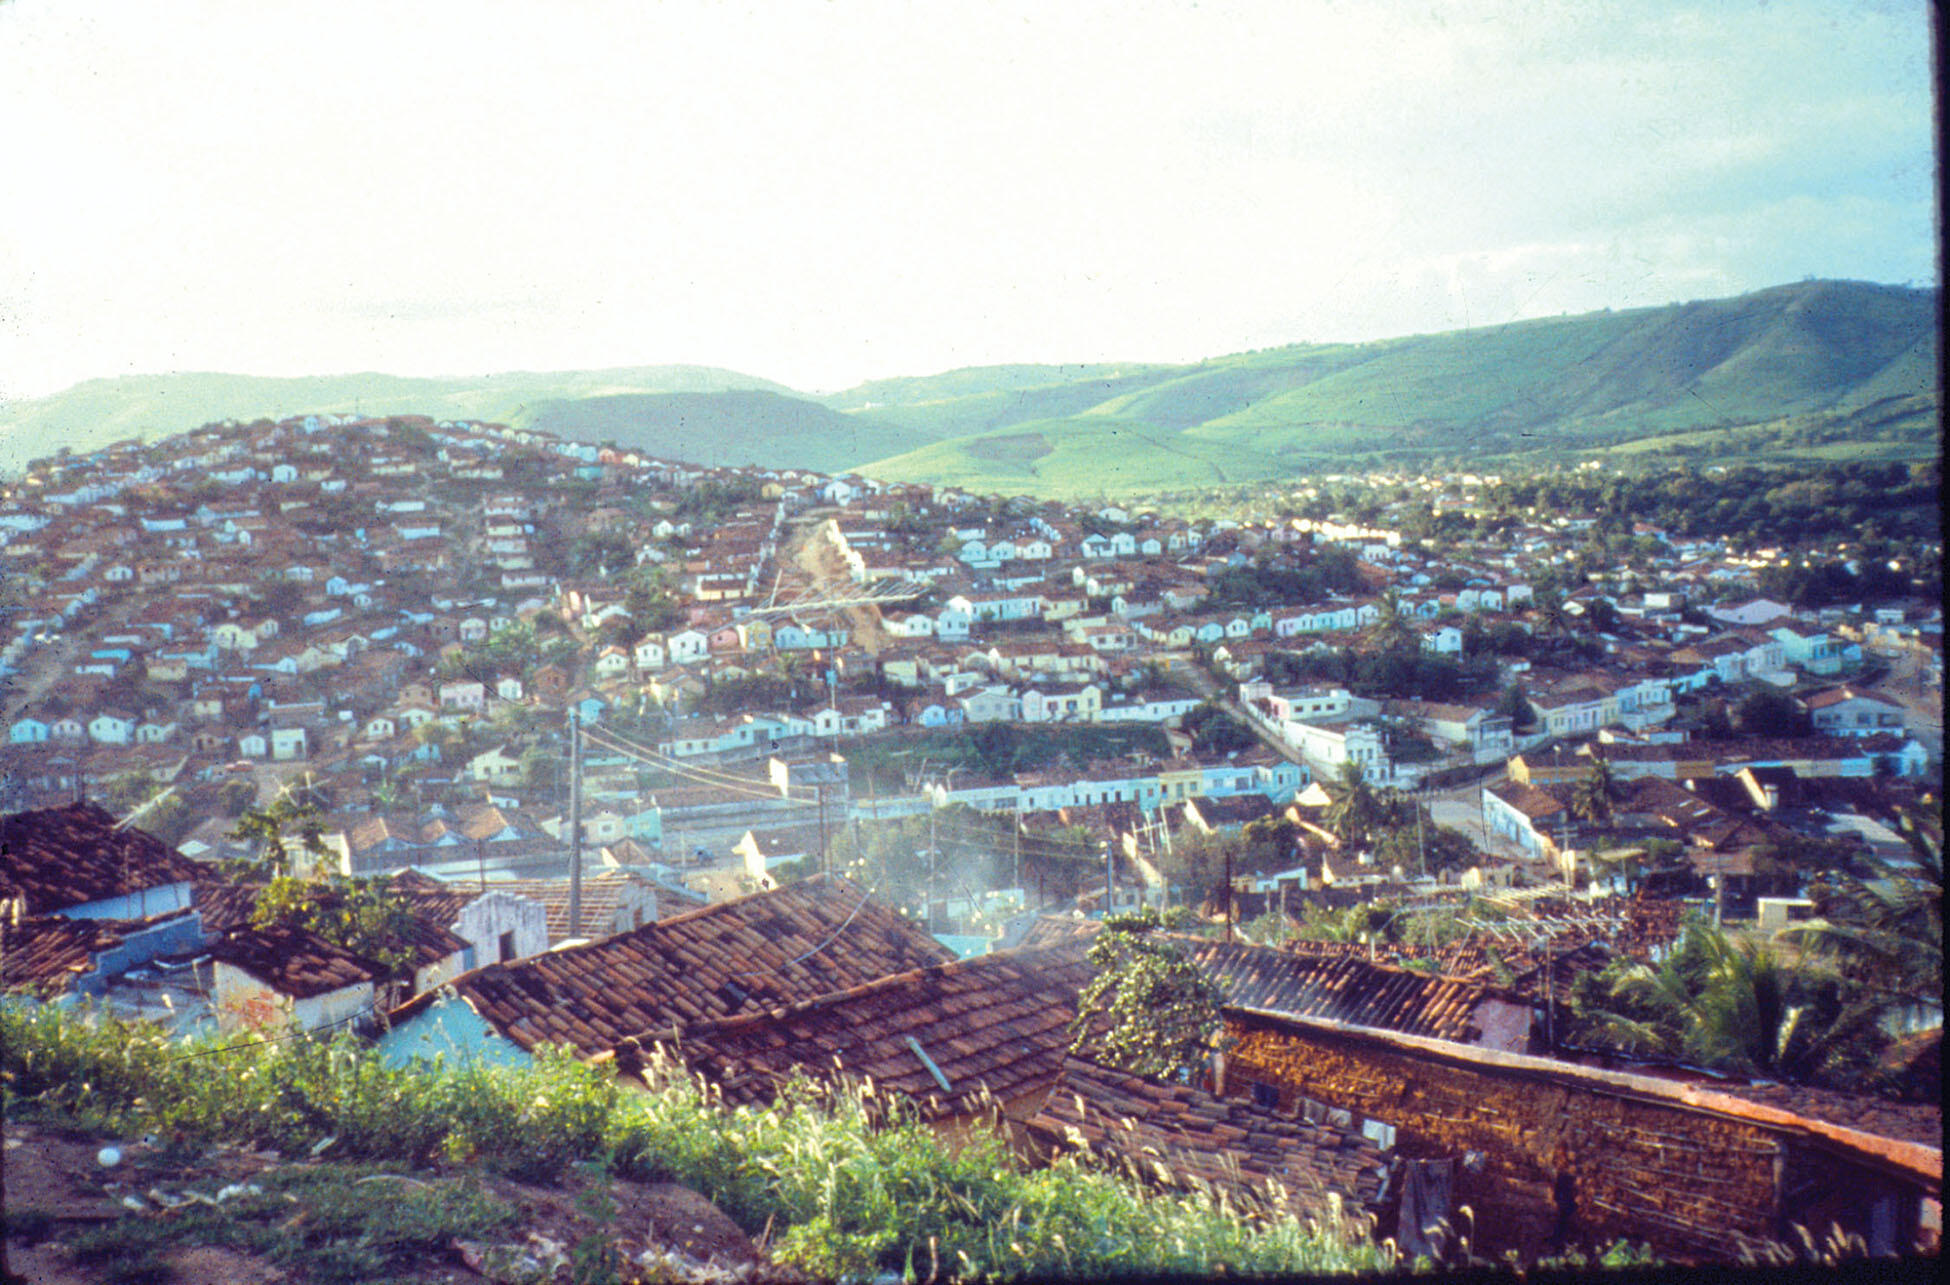 The hillside neighborhoods of the Alto do Cruzeiro. (Photo by Nancy Scheper-Hughes.)